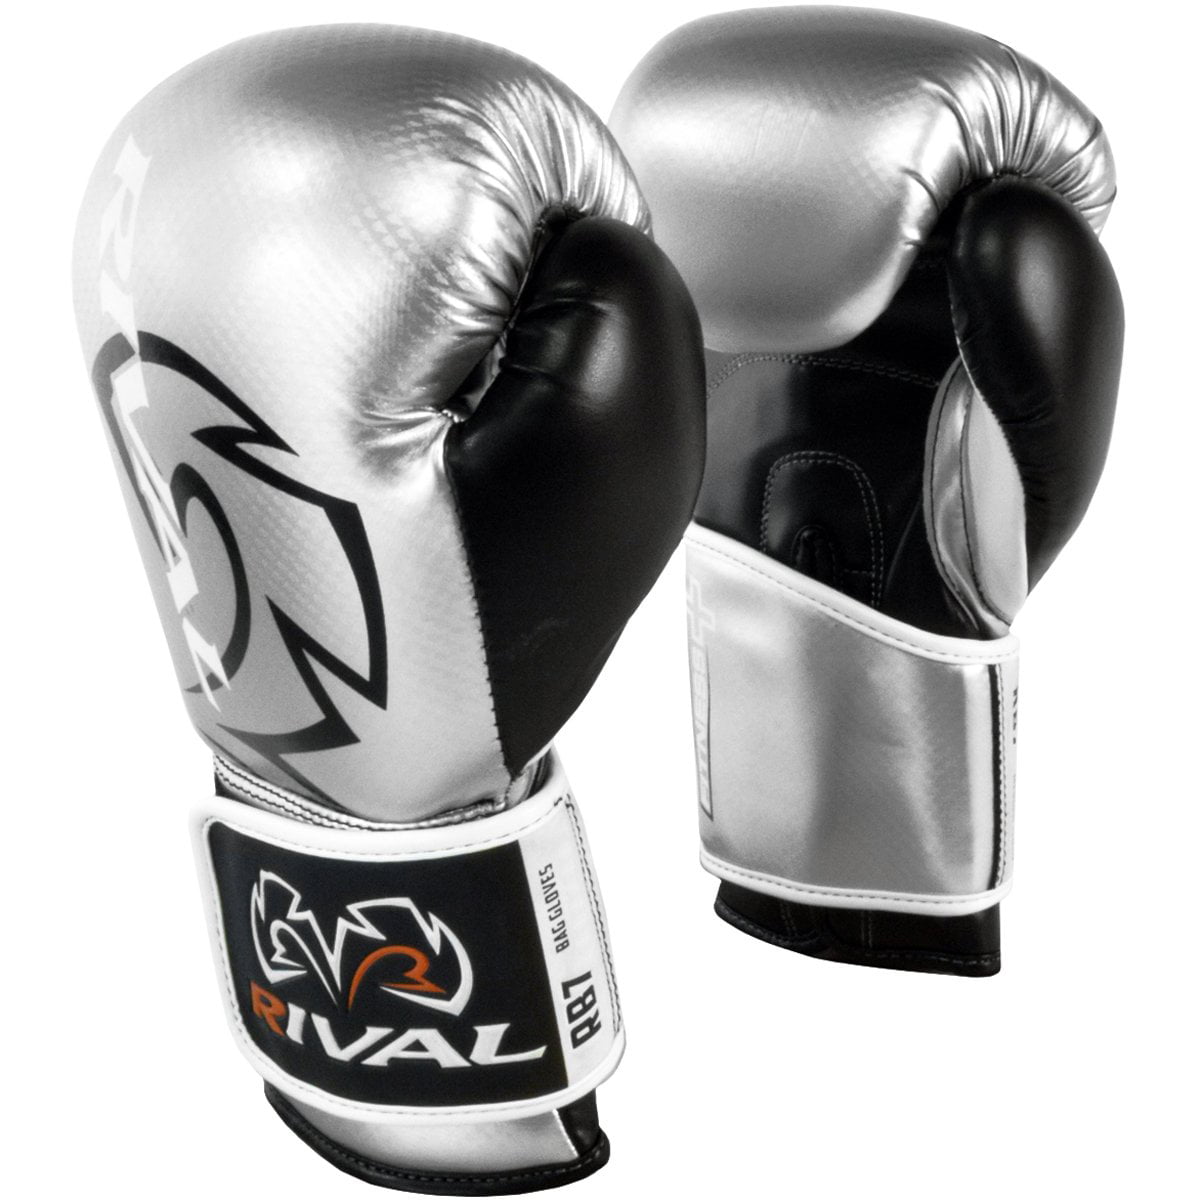 Rival Boxing Bag Gloves RB7 training Fitness Black Gold 